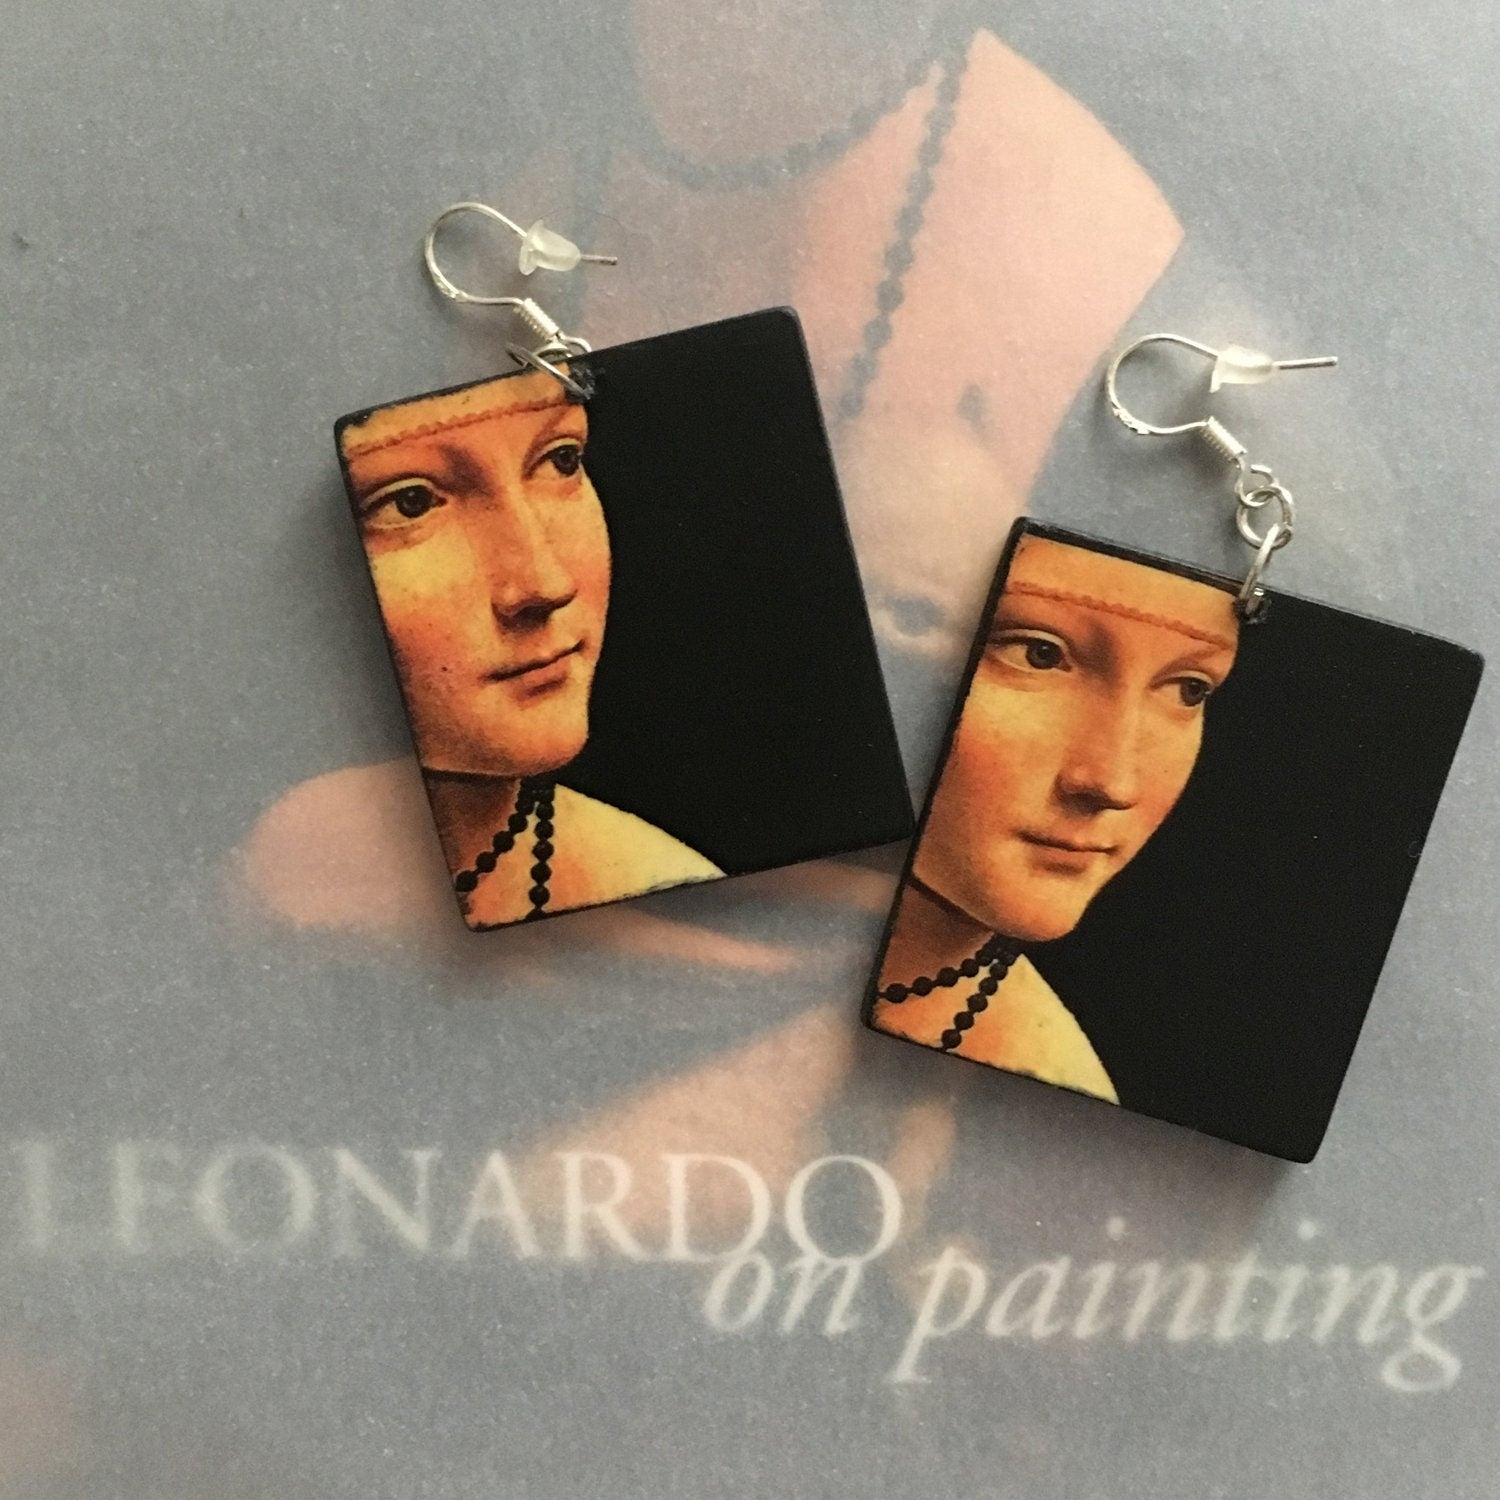 Italian Renaissance artist Leonardo da Vinci and his famous painting "La dama con l'ermellino" inspired Obljewellery to  handmade these art wooden earring with sterling silver hooks .